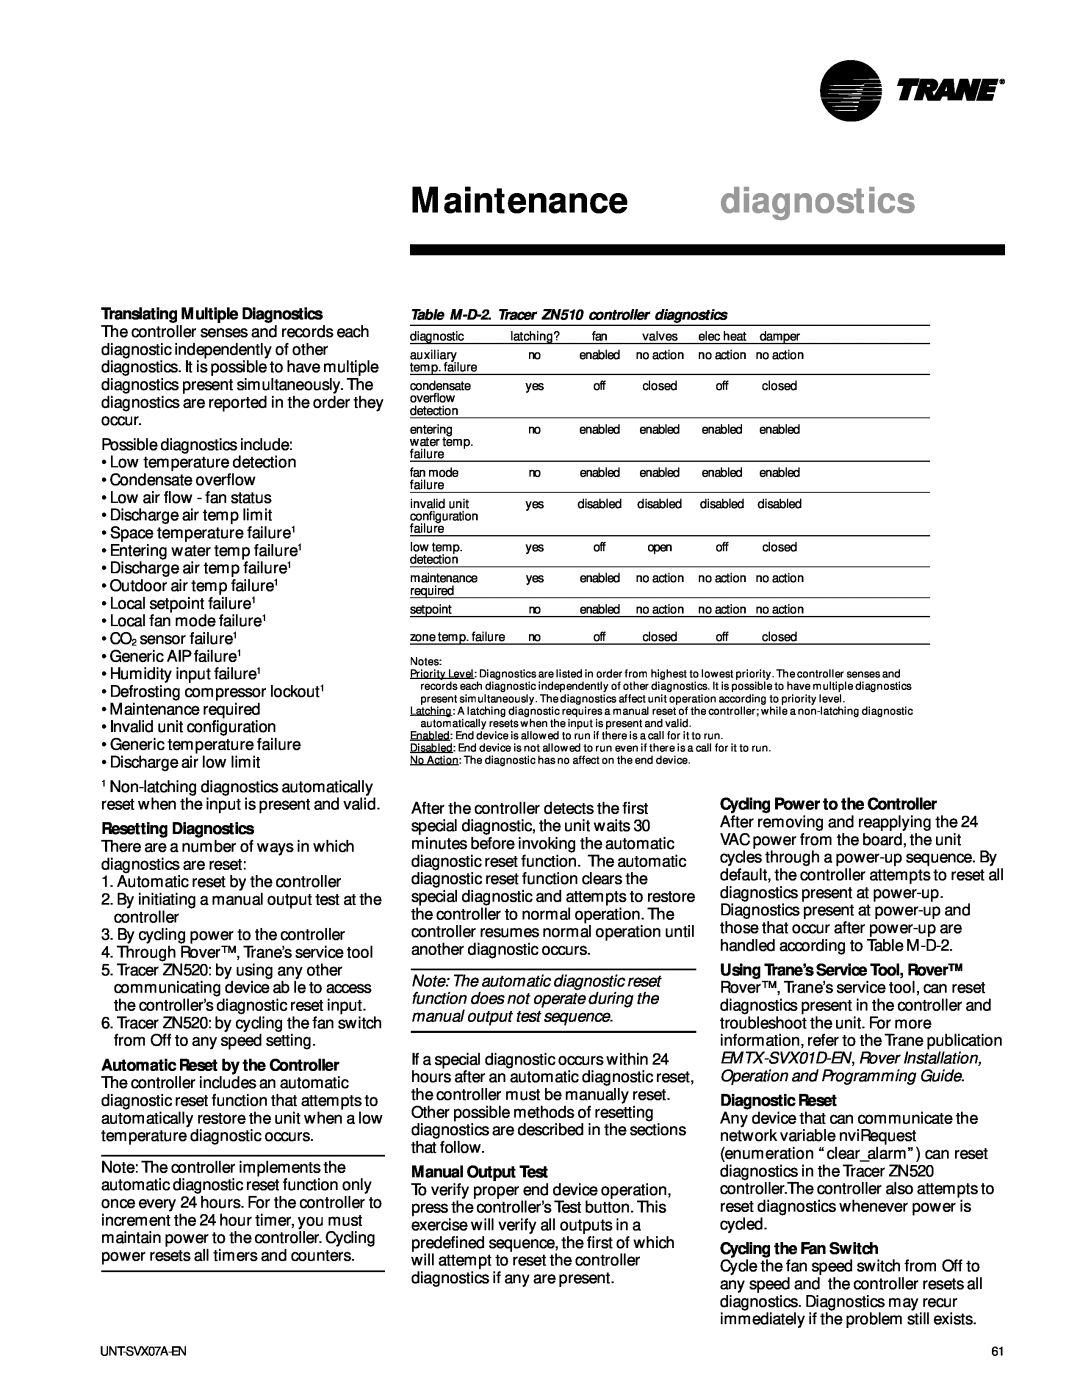 Trane UniTrane Fan-Coil & Force Flo Air Conditioners manual Maintenance diagnostics, Translating Multiple Diagnostics 